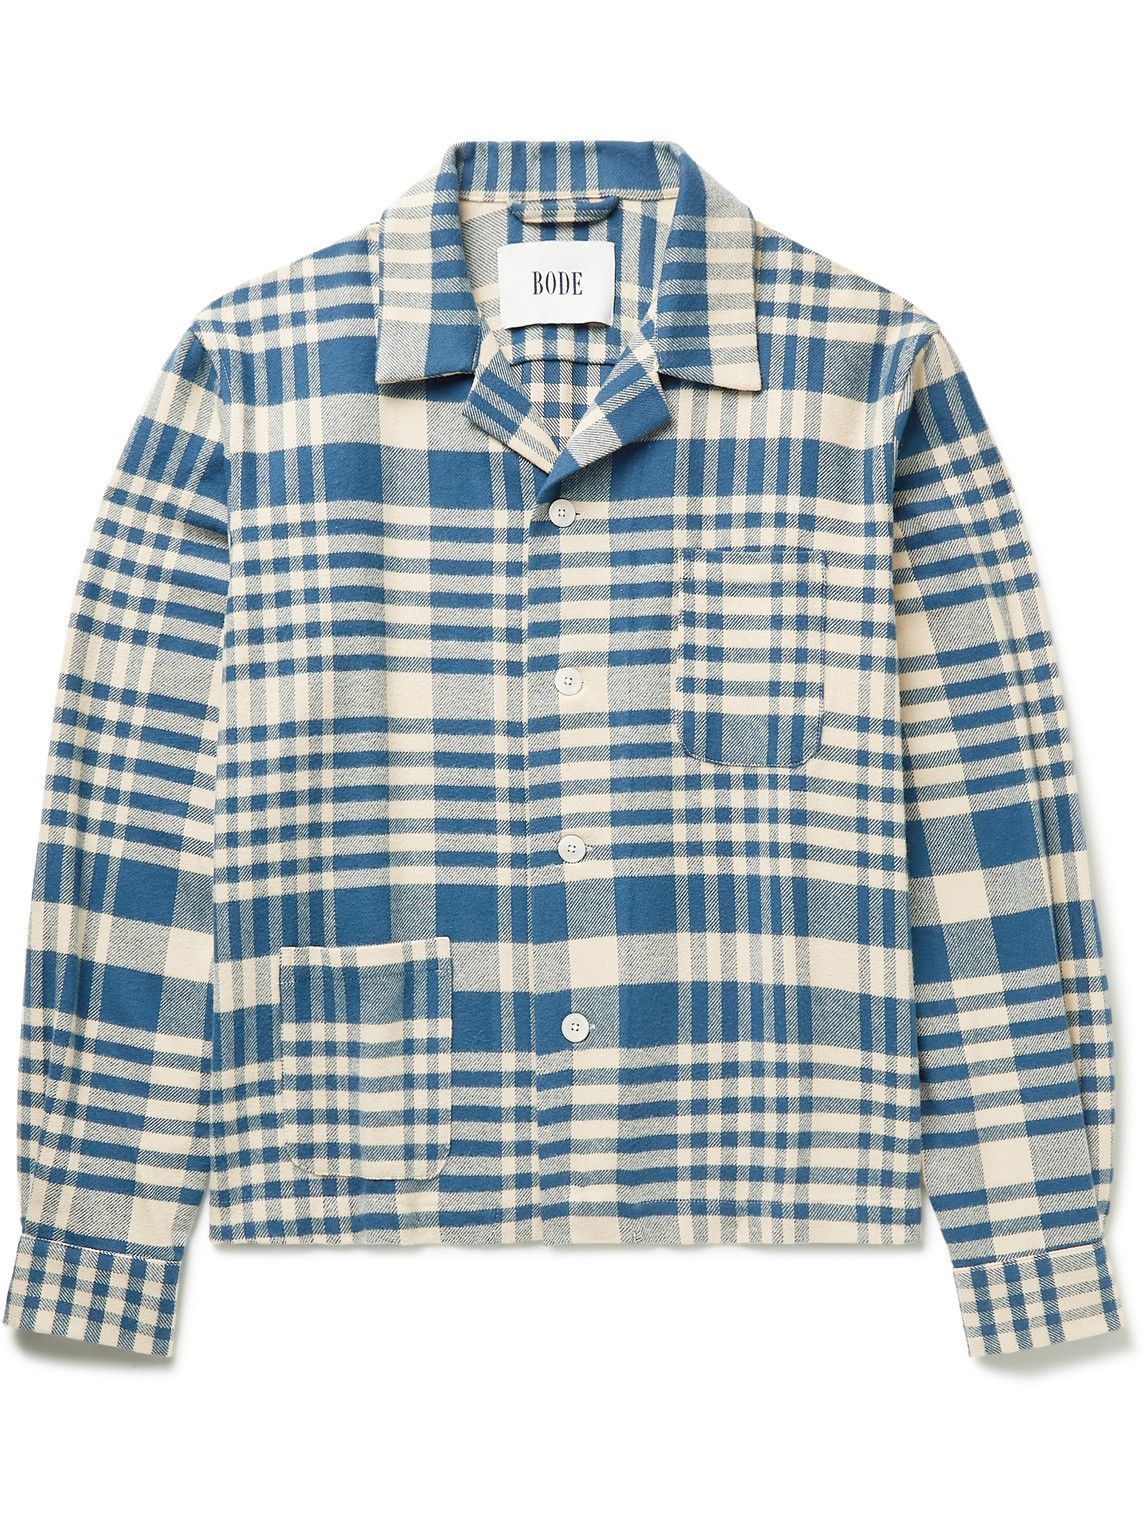 Photo: BODE - Putnam Camp-Collar Checked Cotton-Flannel Shirt Jacket - Blue